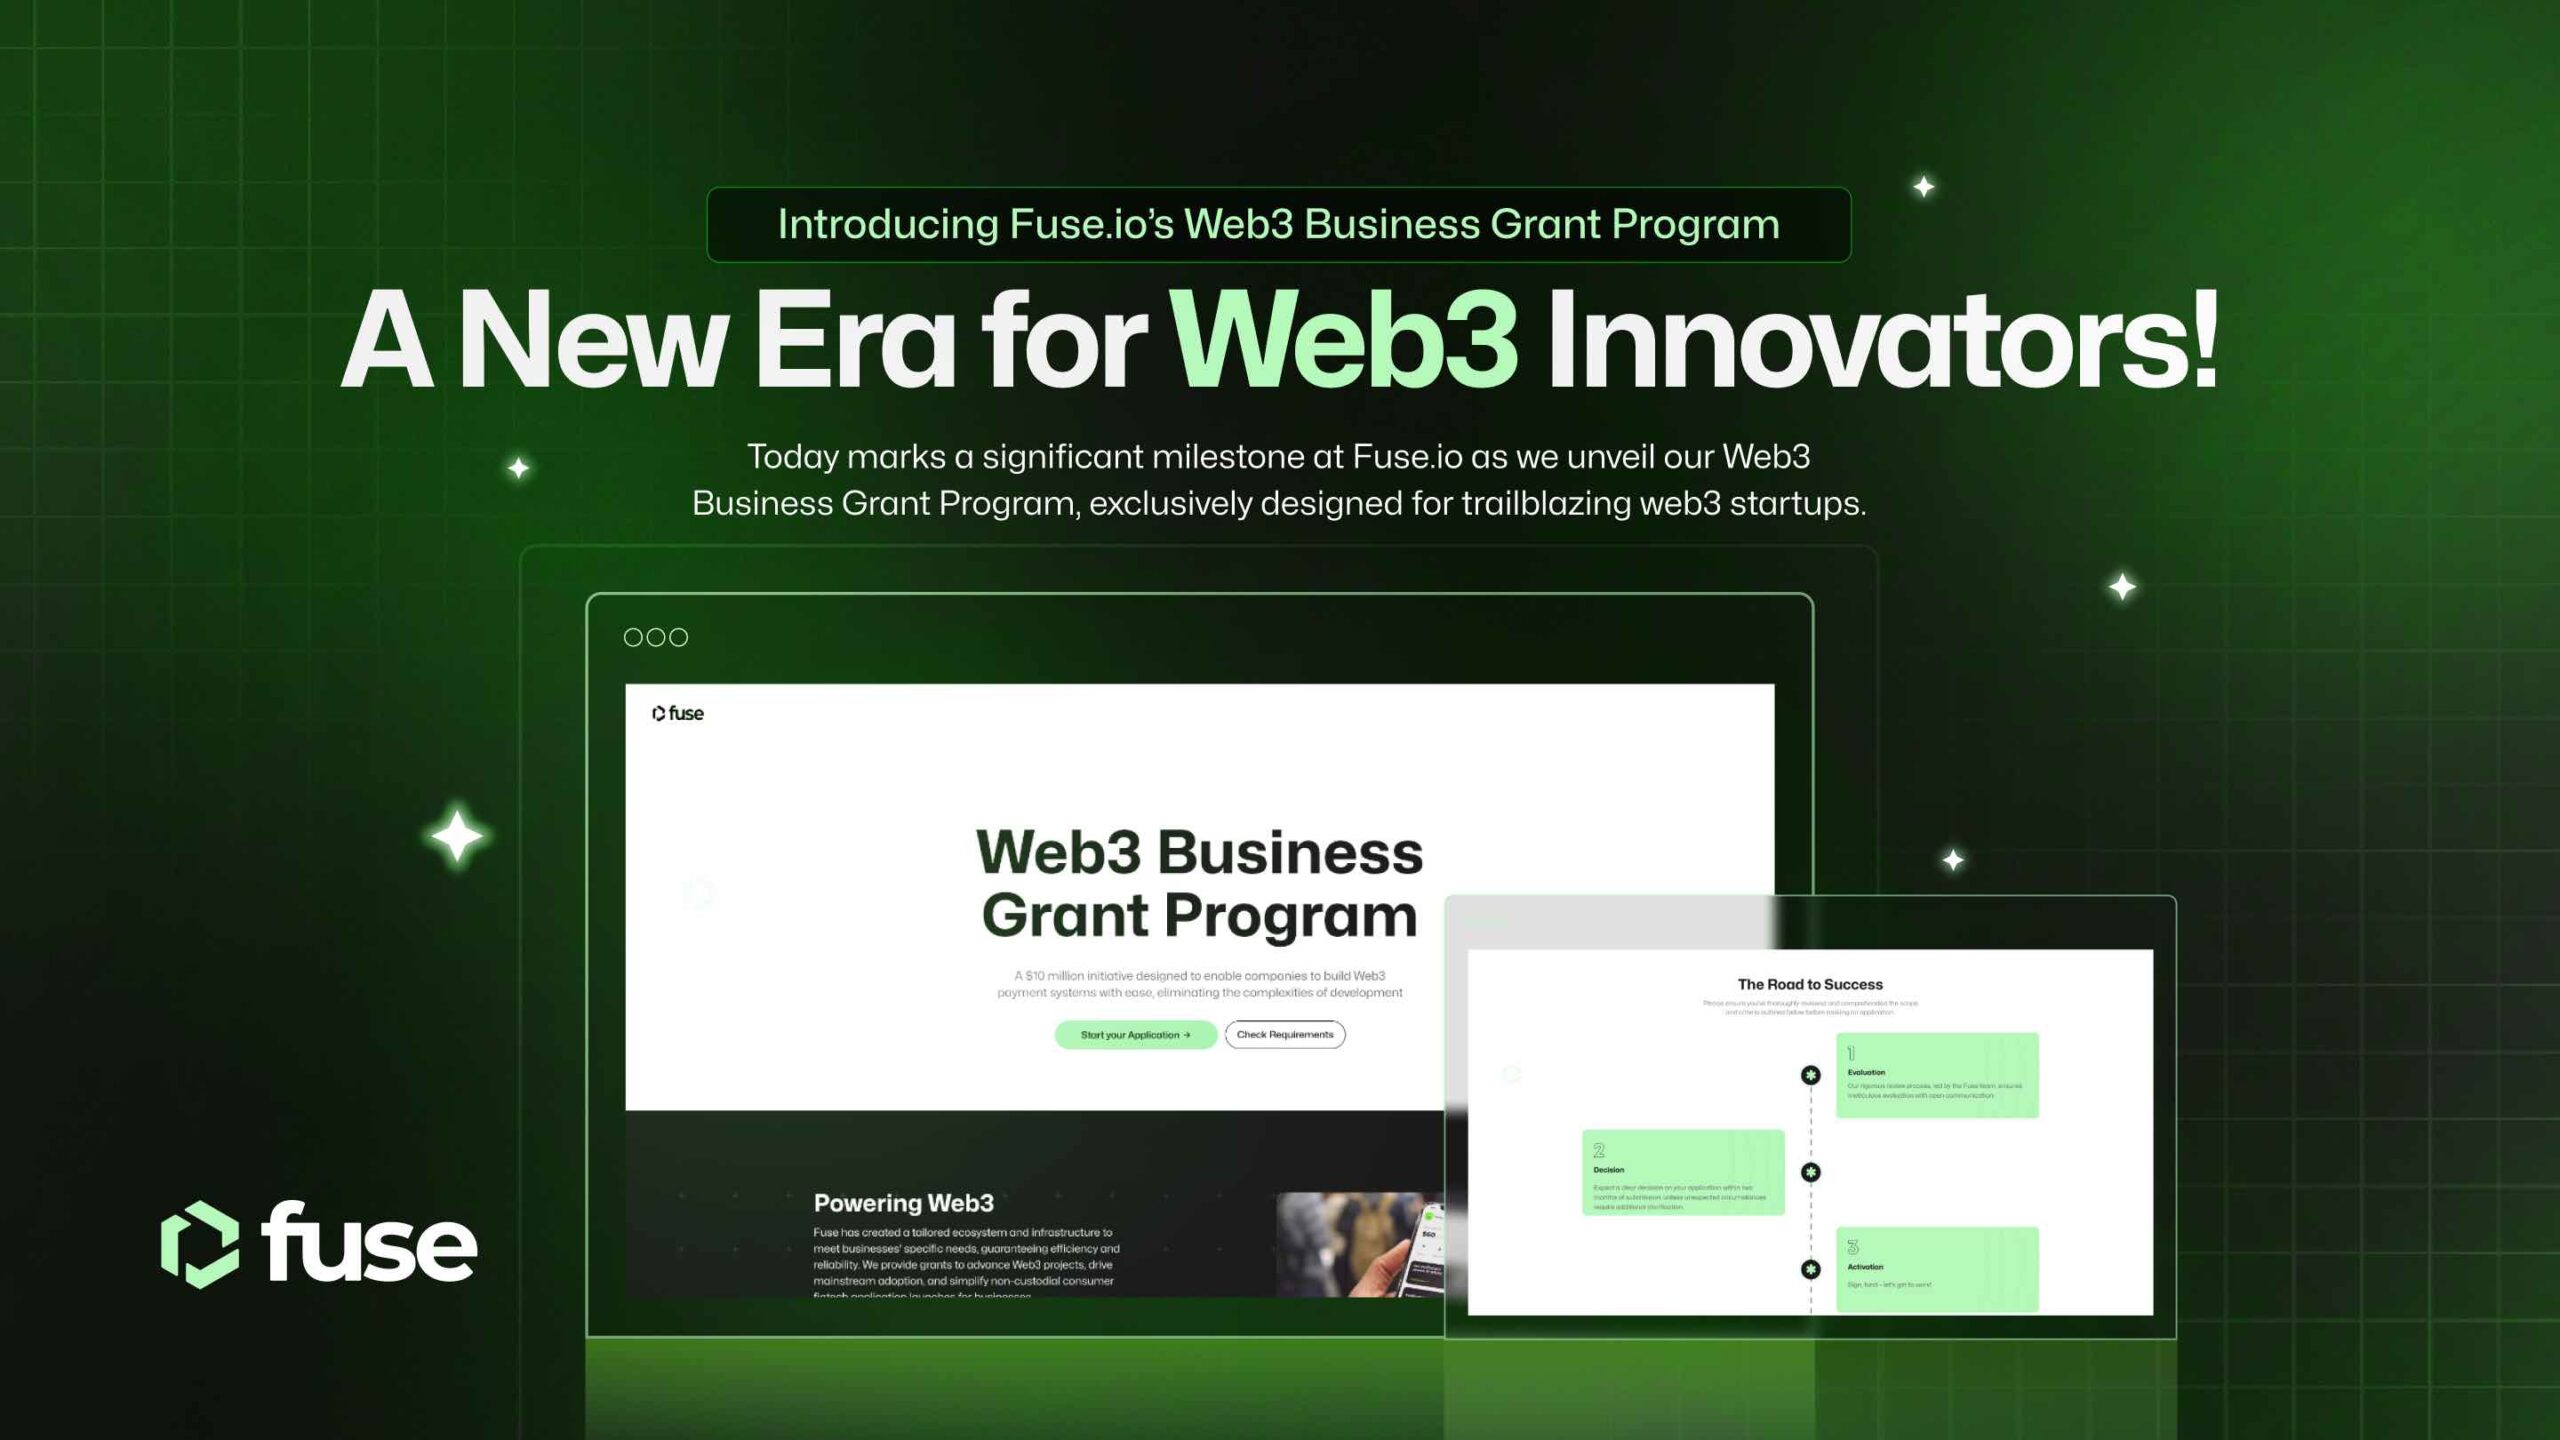 WEB3 BUSINESS GRANTS